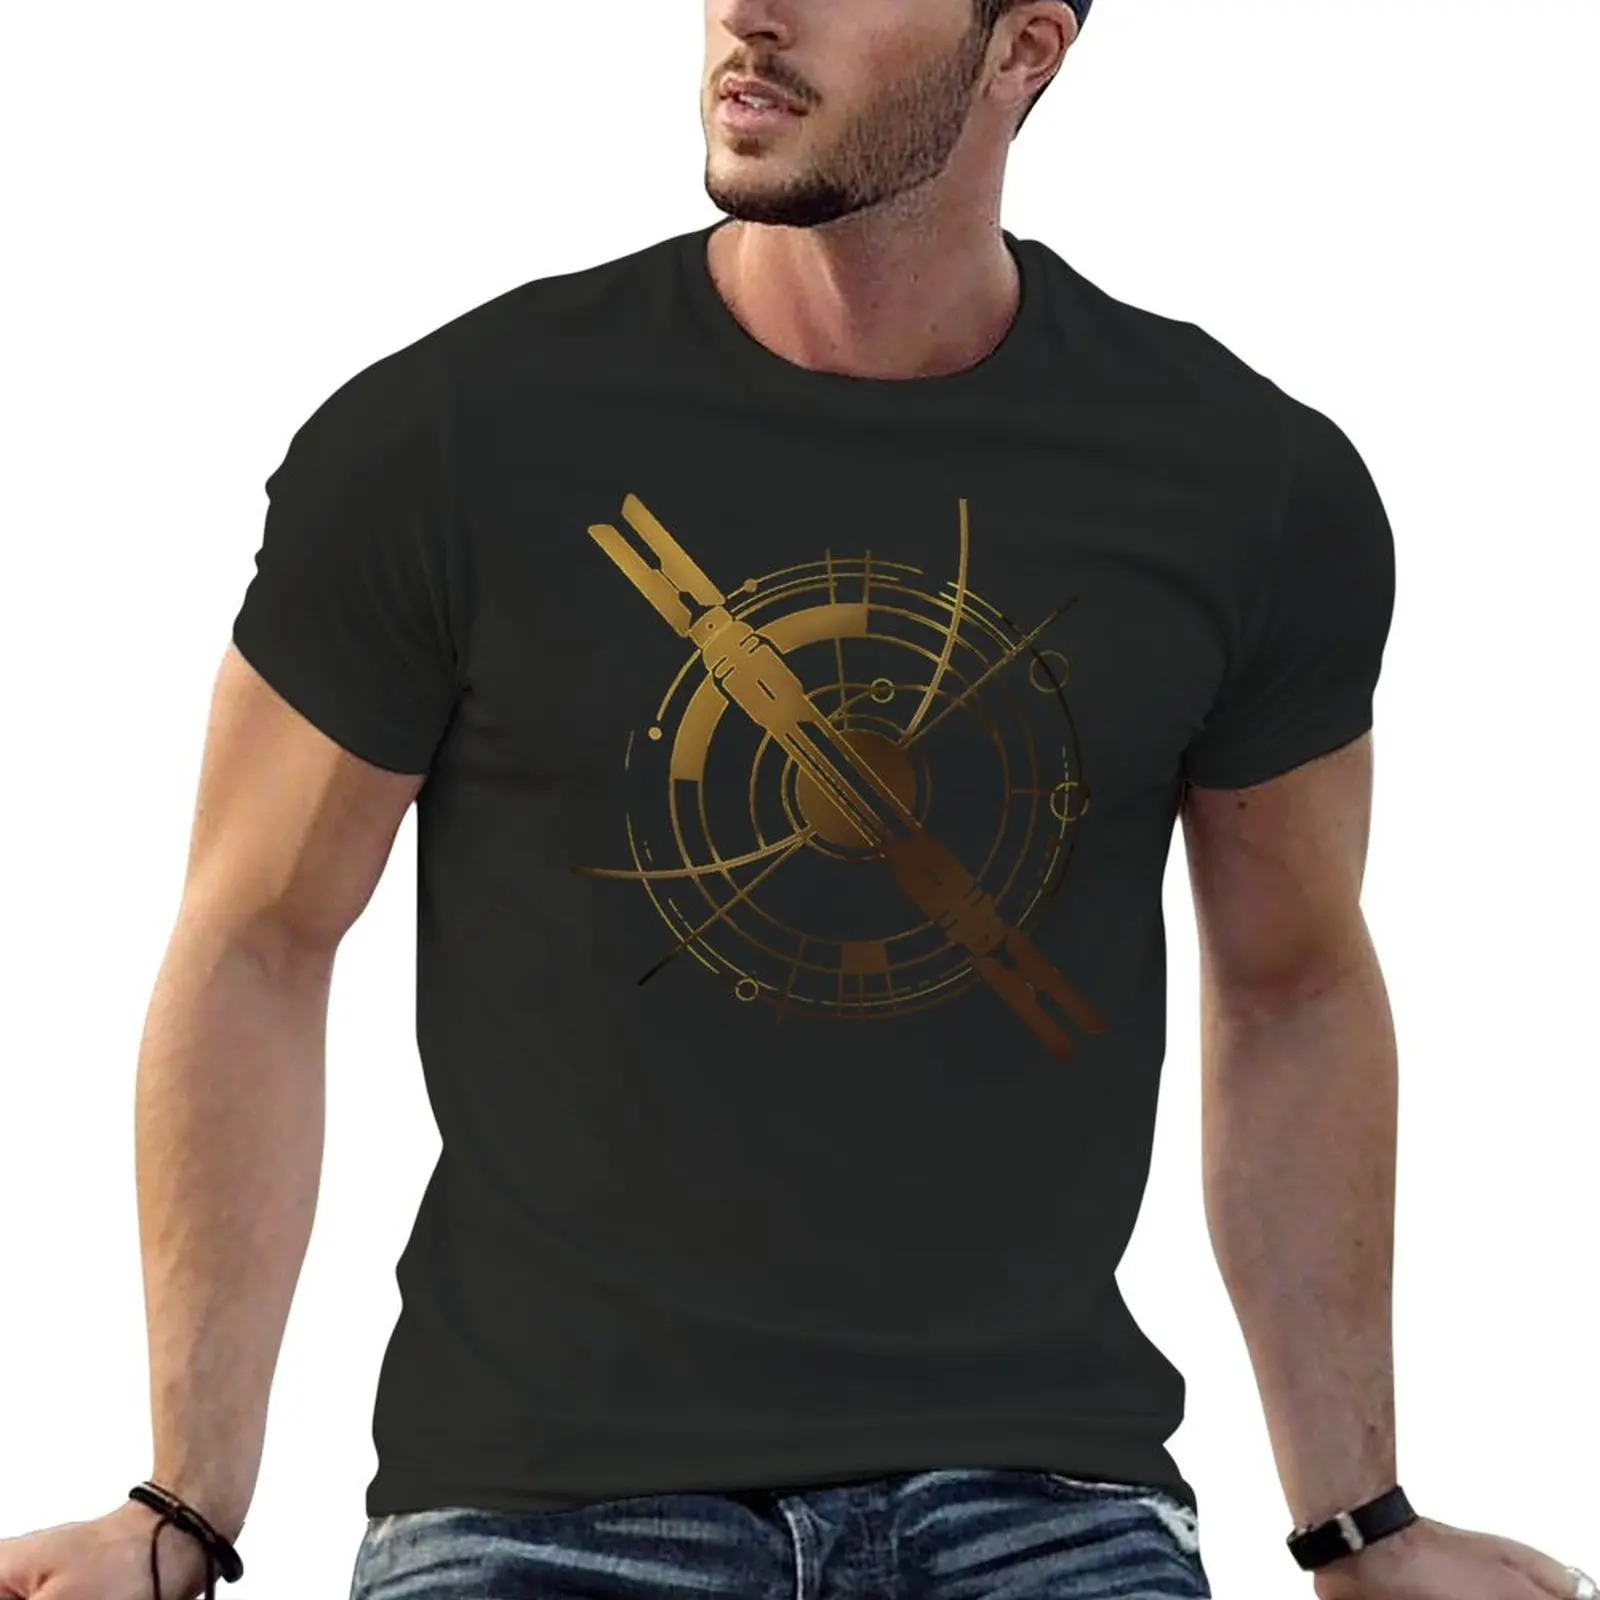 

New Cal Kestis Lightsaber design T-Shirt shirts graphic tees quick drying t-shirt tops mens plain t shirts